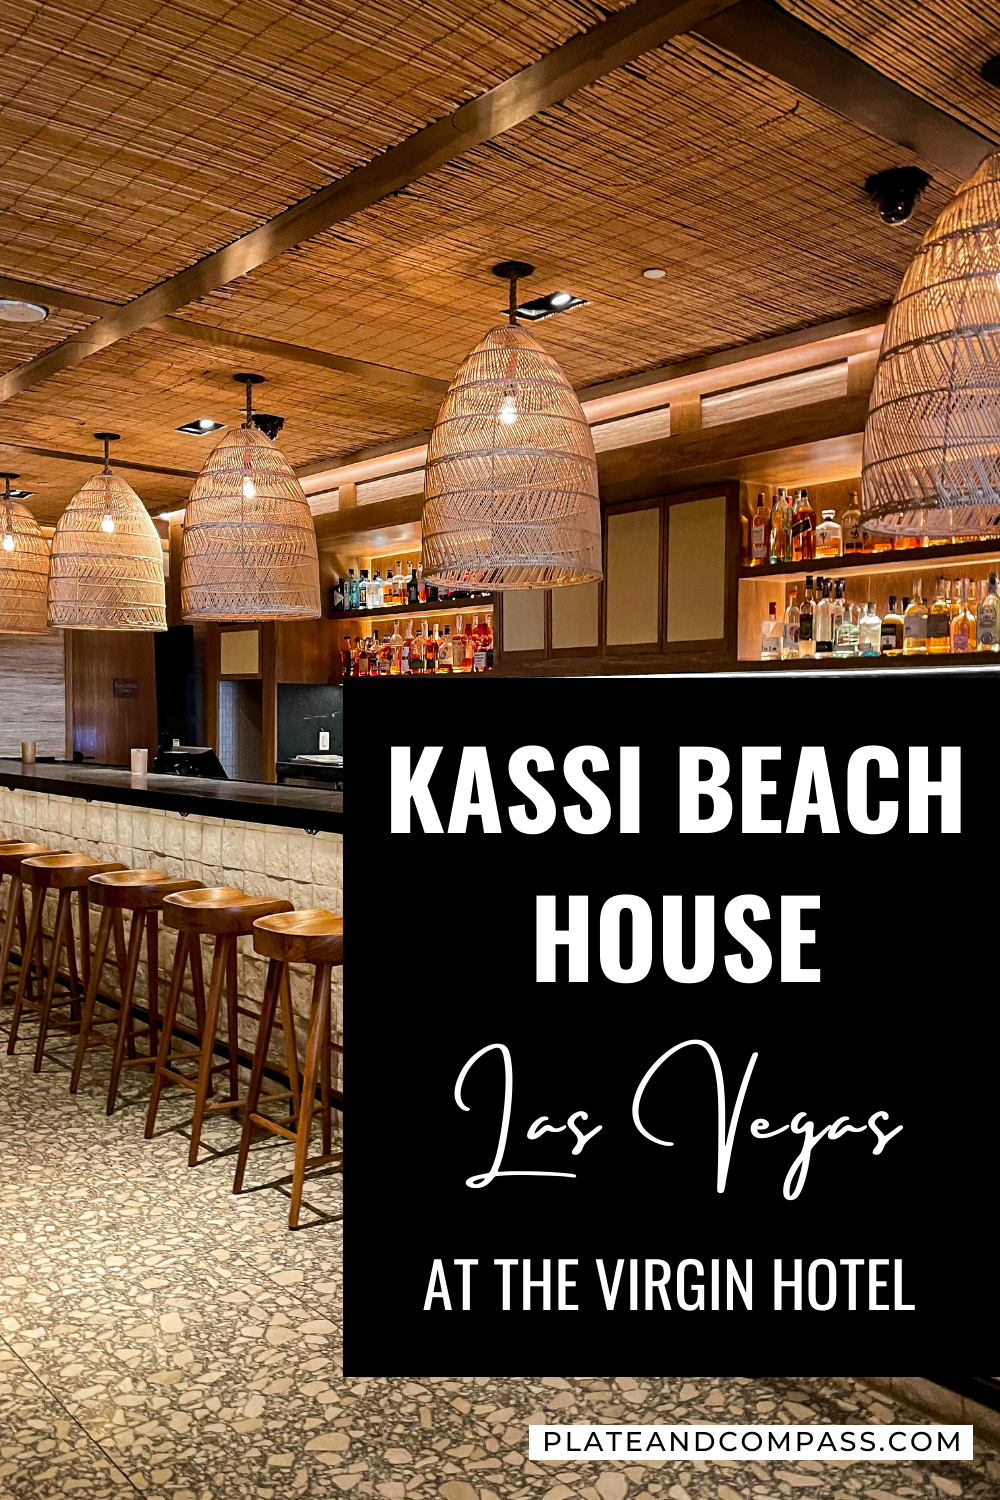 Kassi Beach House Las Vegas at the Virgin Hotel